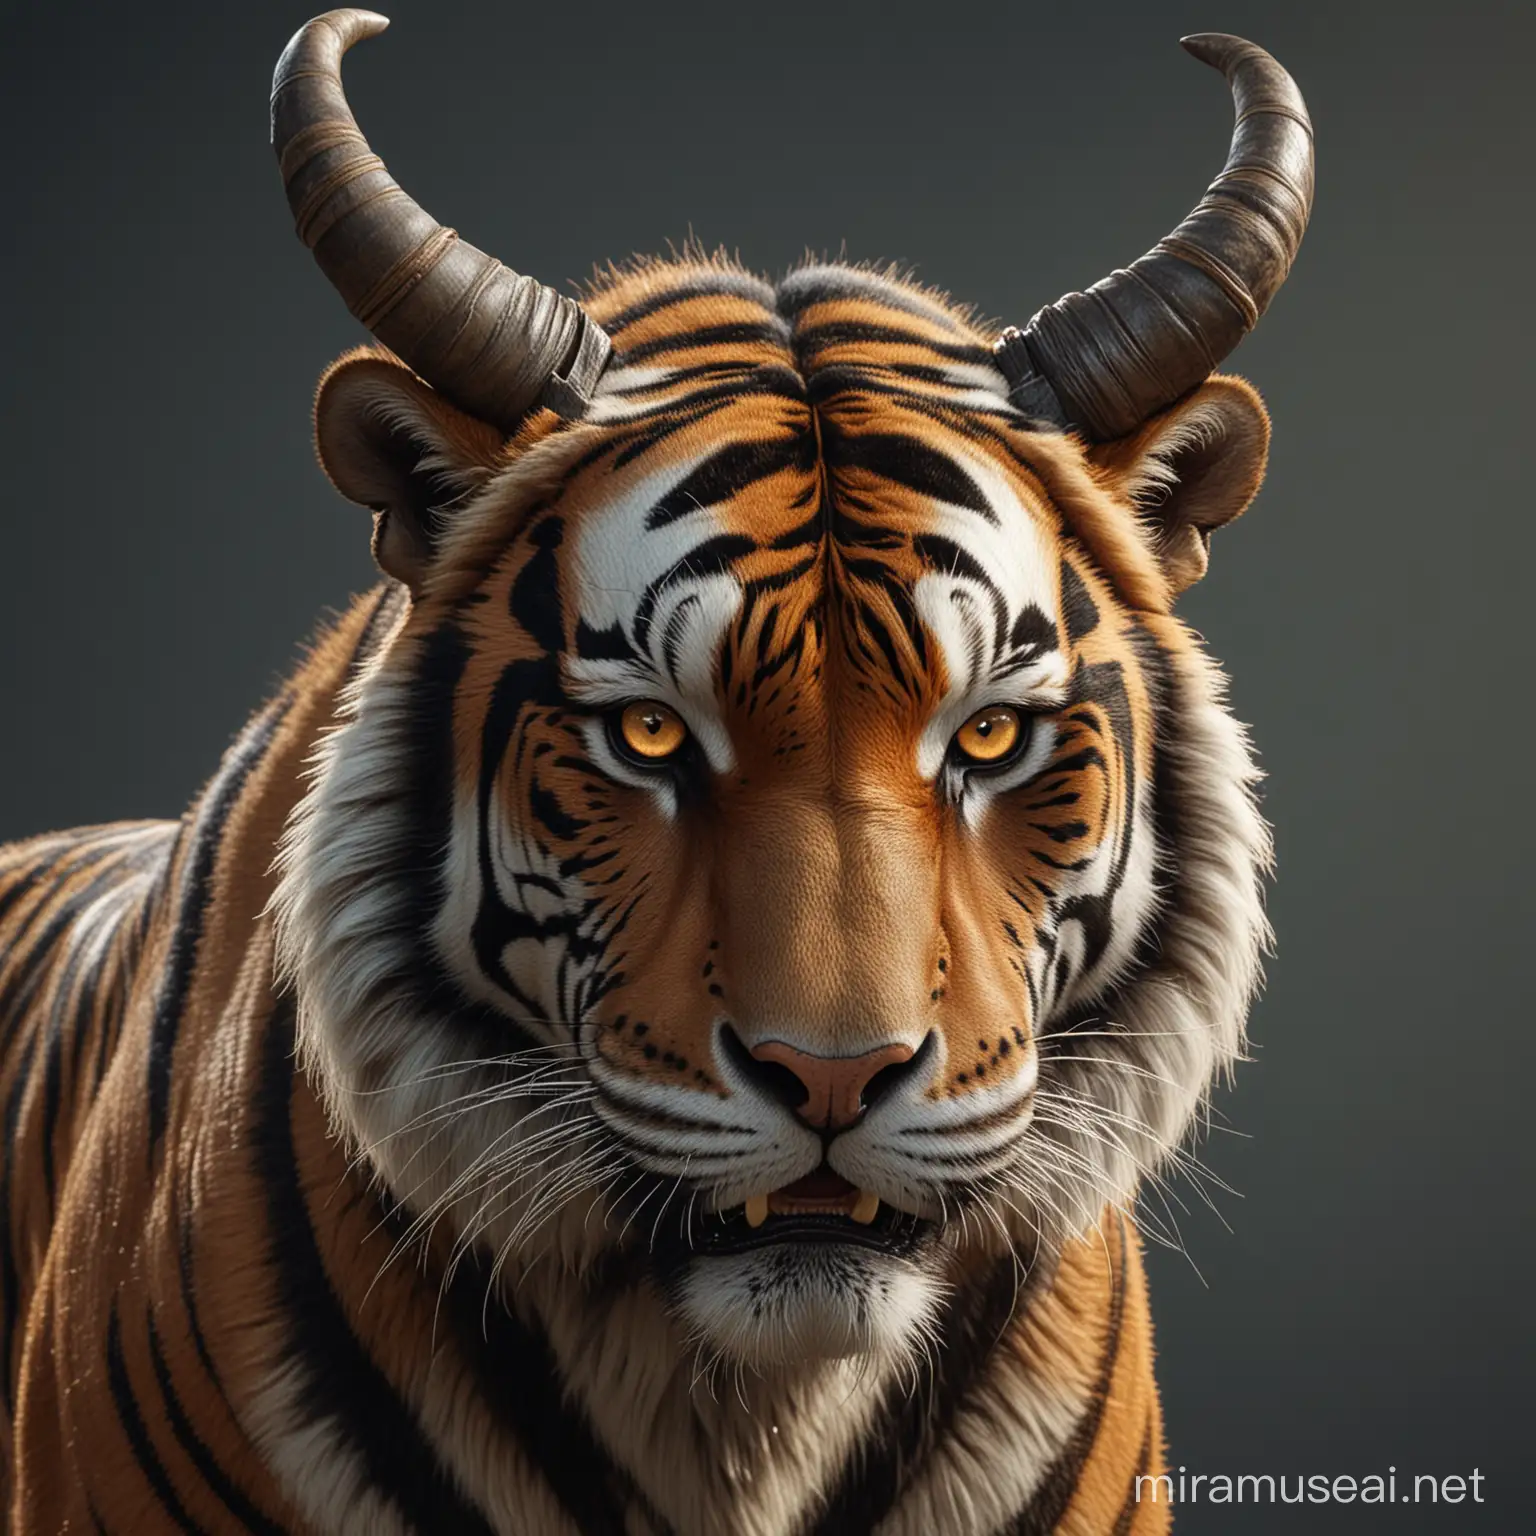 тигр, с рогами быка на голове, 5D, 4K, cyber reality, photo realism, cyberdetalization, ultrarealism, detailed photo, absolute realism